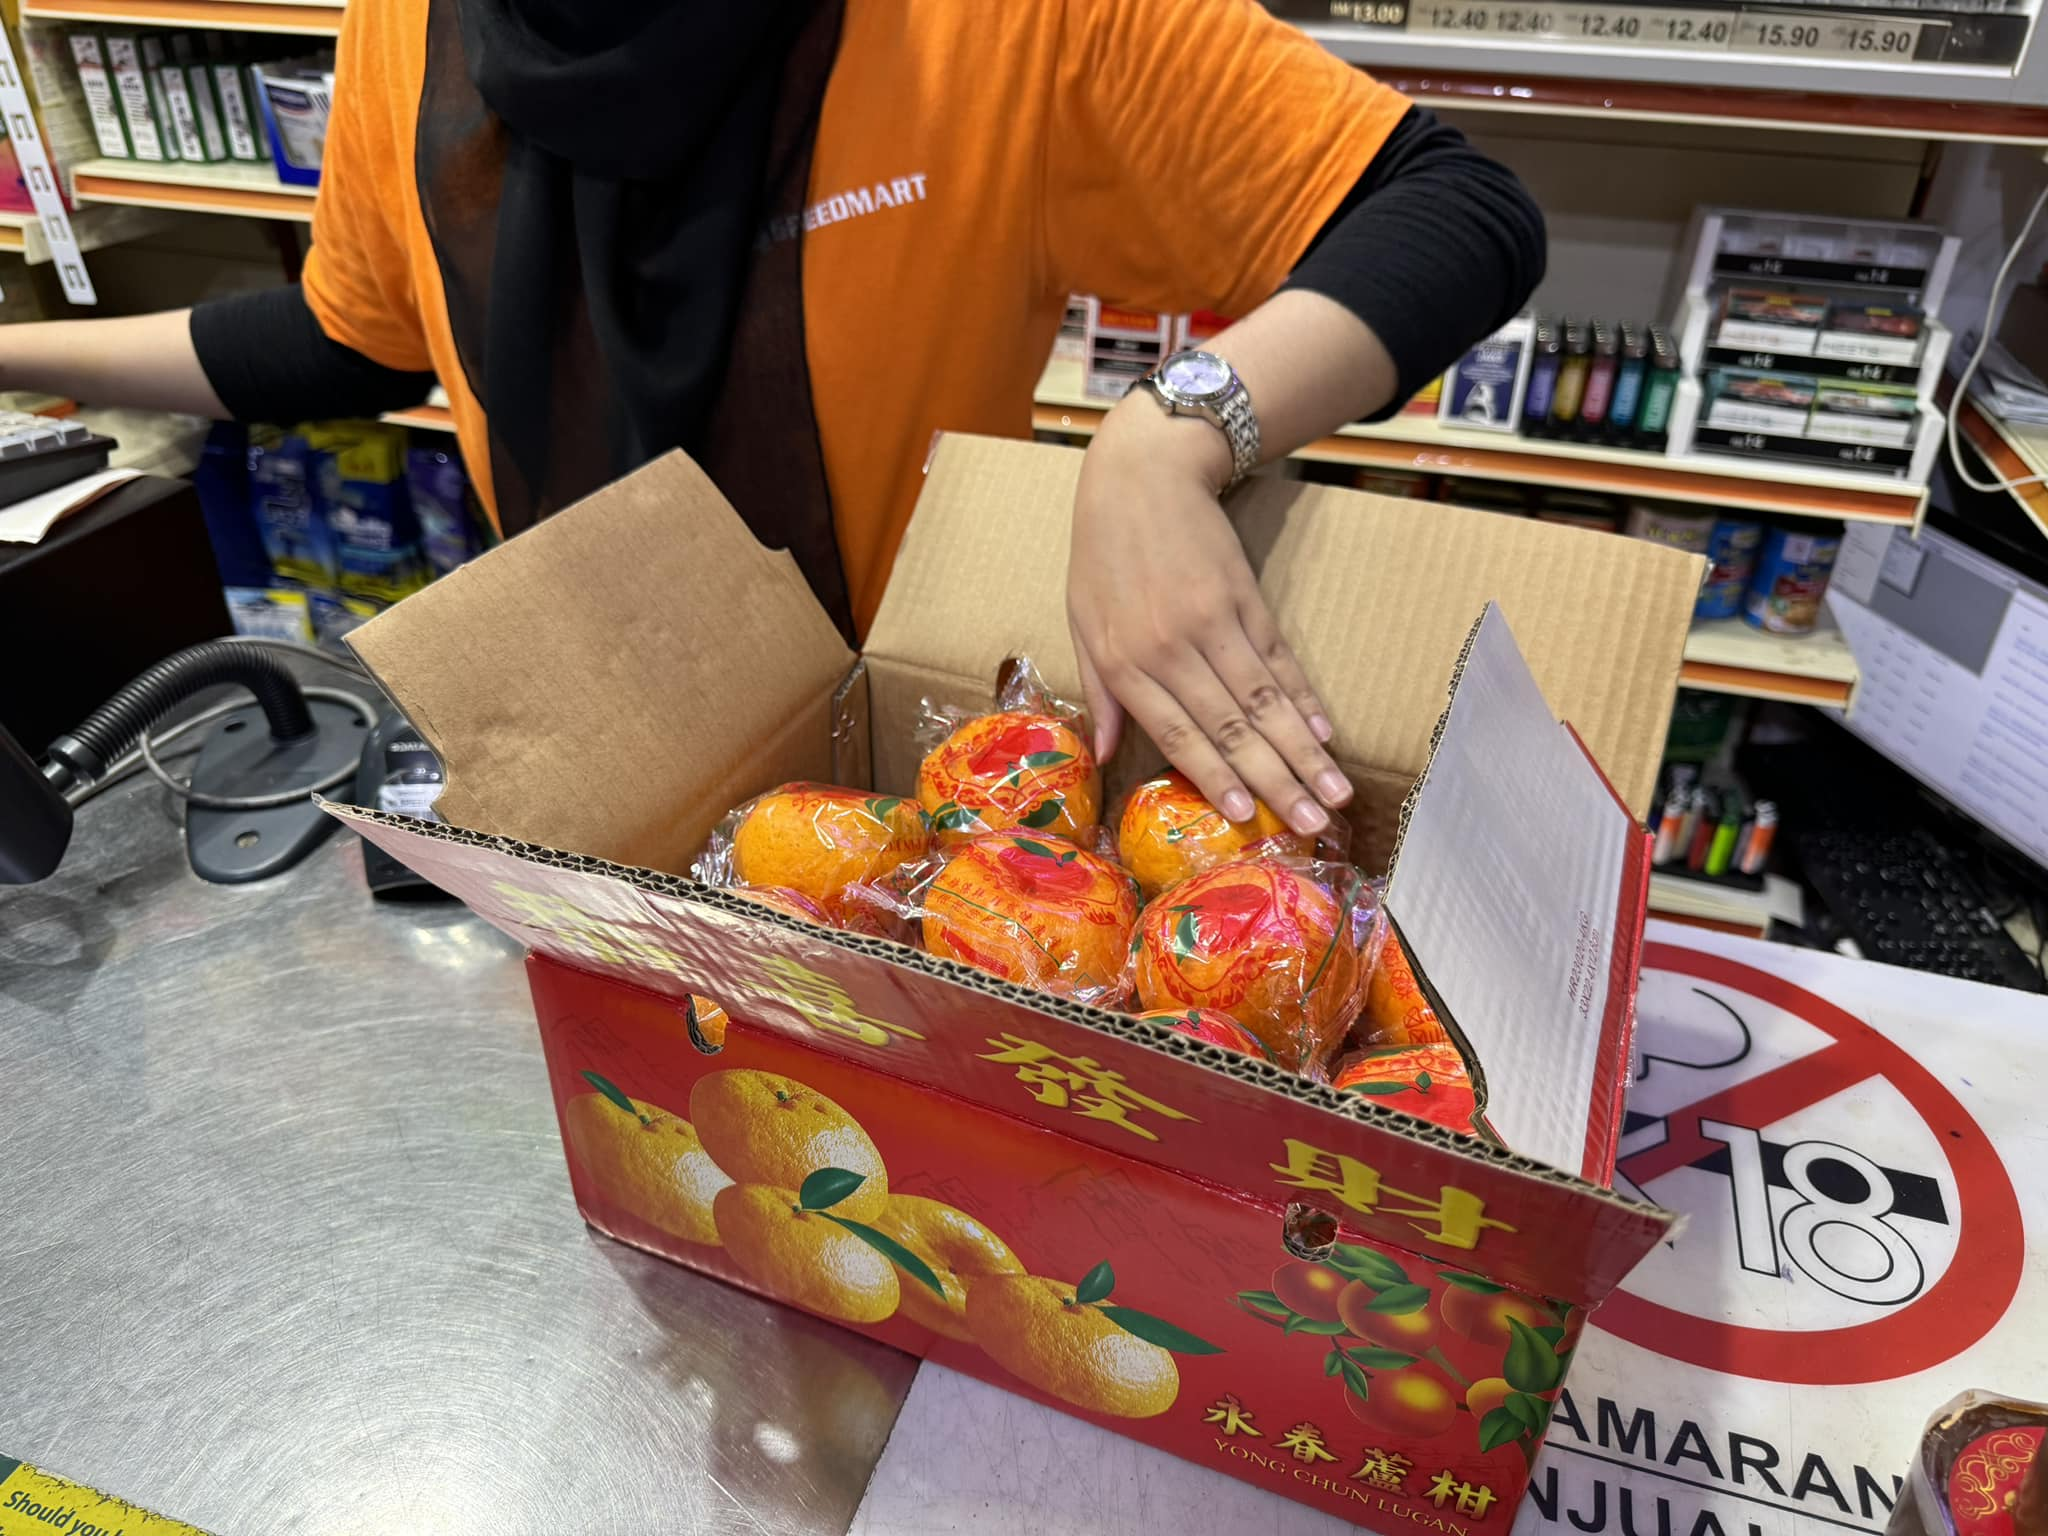 99 speedmart staff checks each mandarin oranges in box to check for spolied oranges